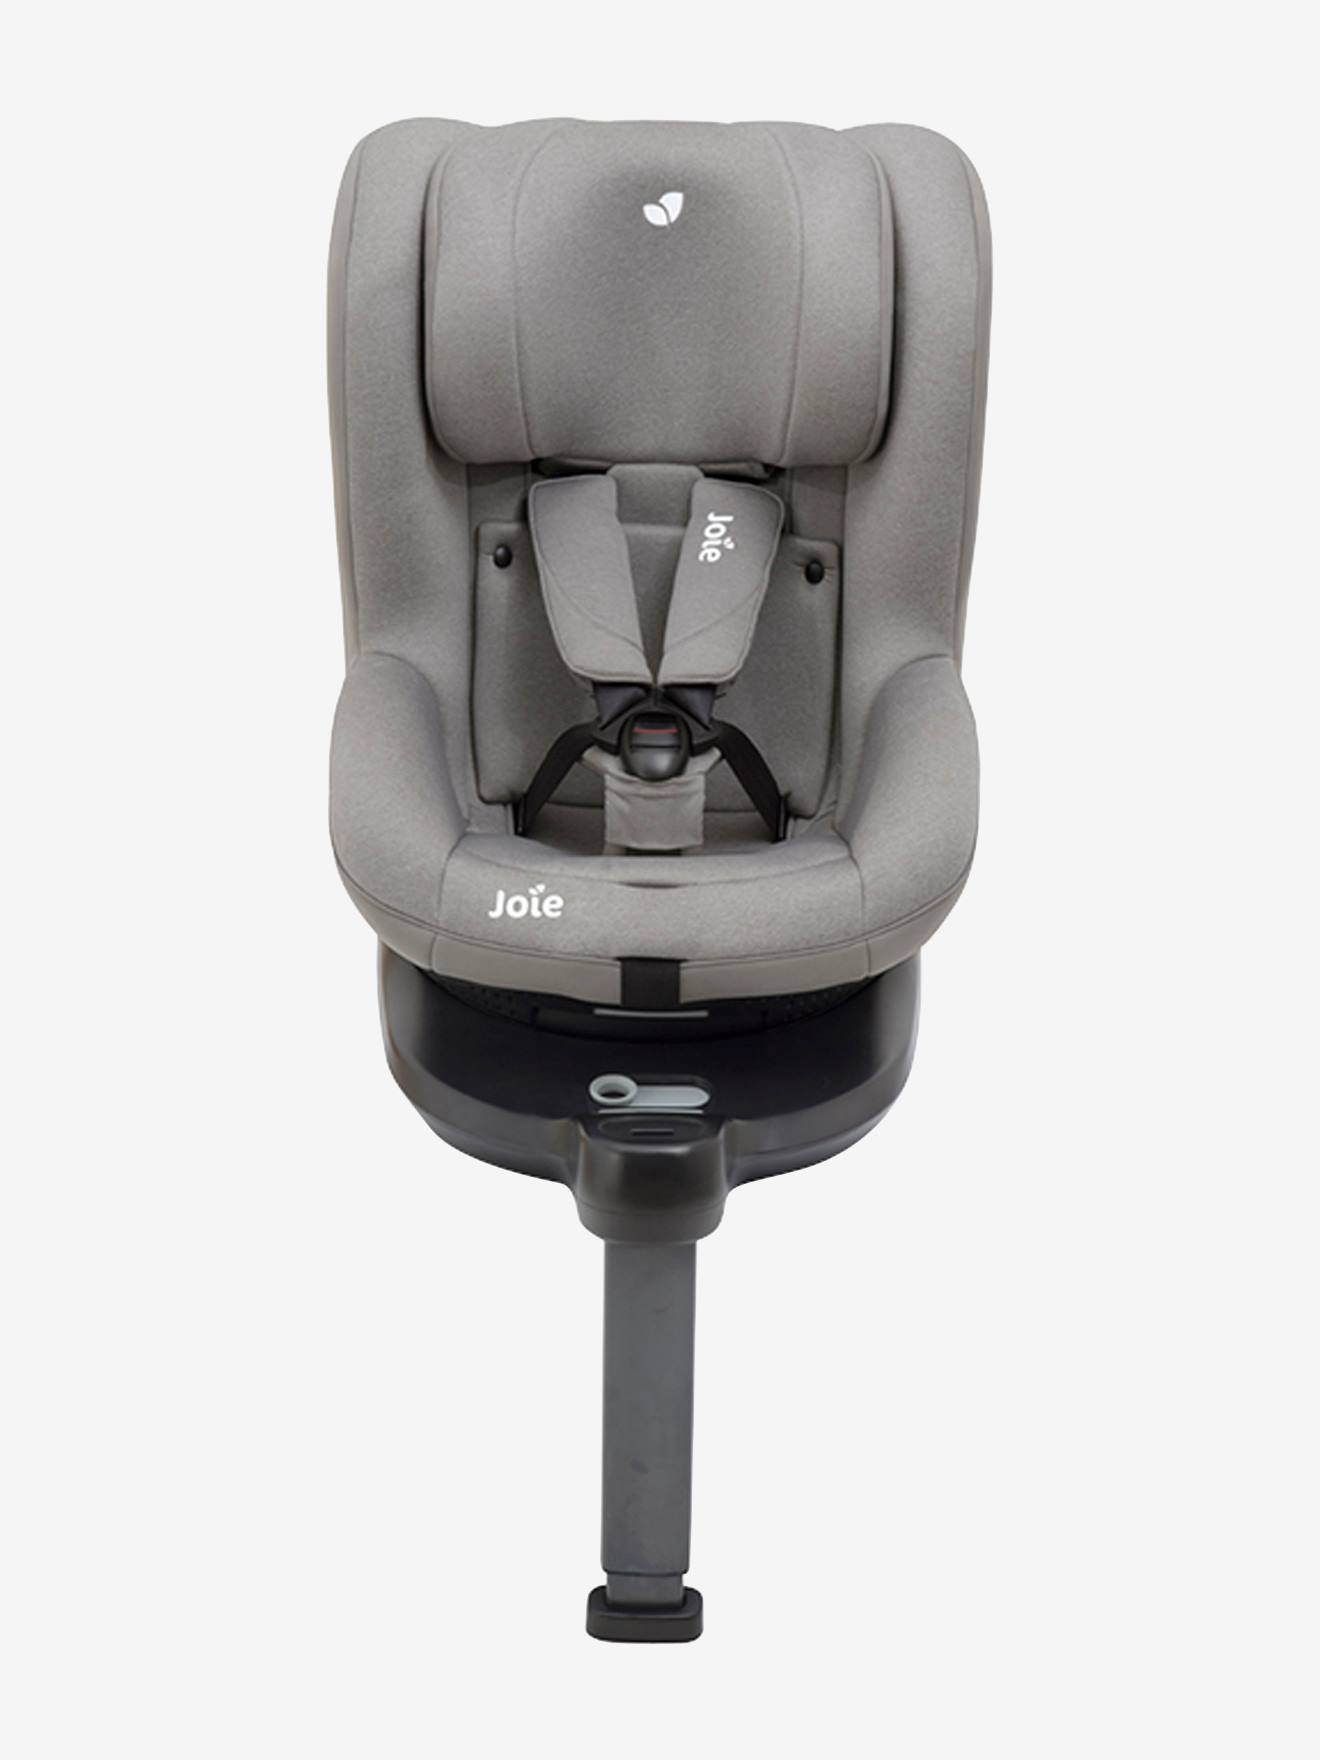 Joie i-Spin 360 : prix et avis du siège auto